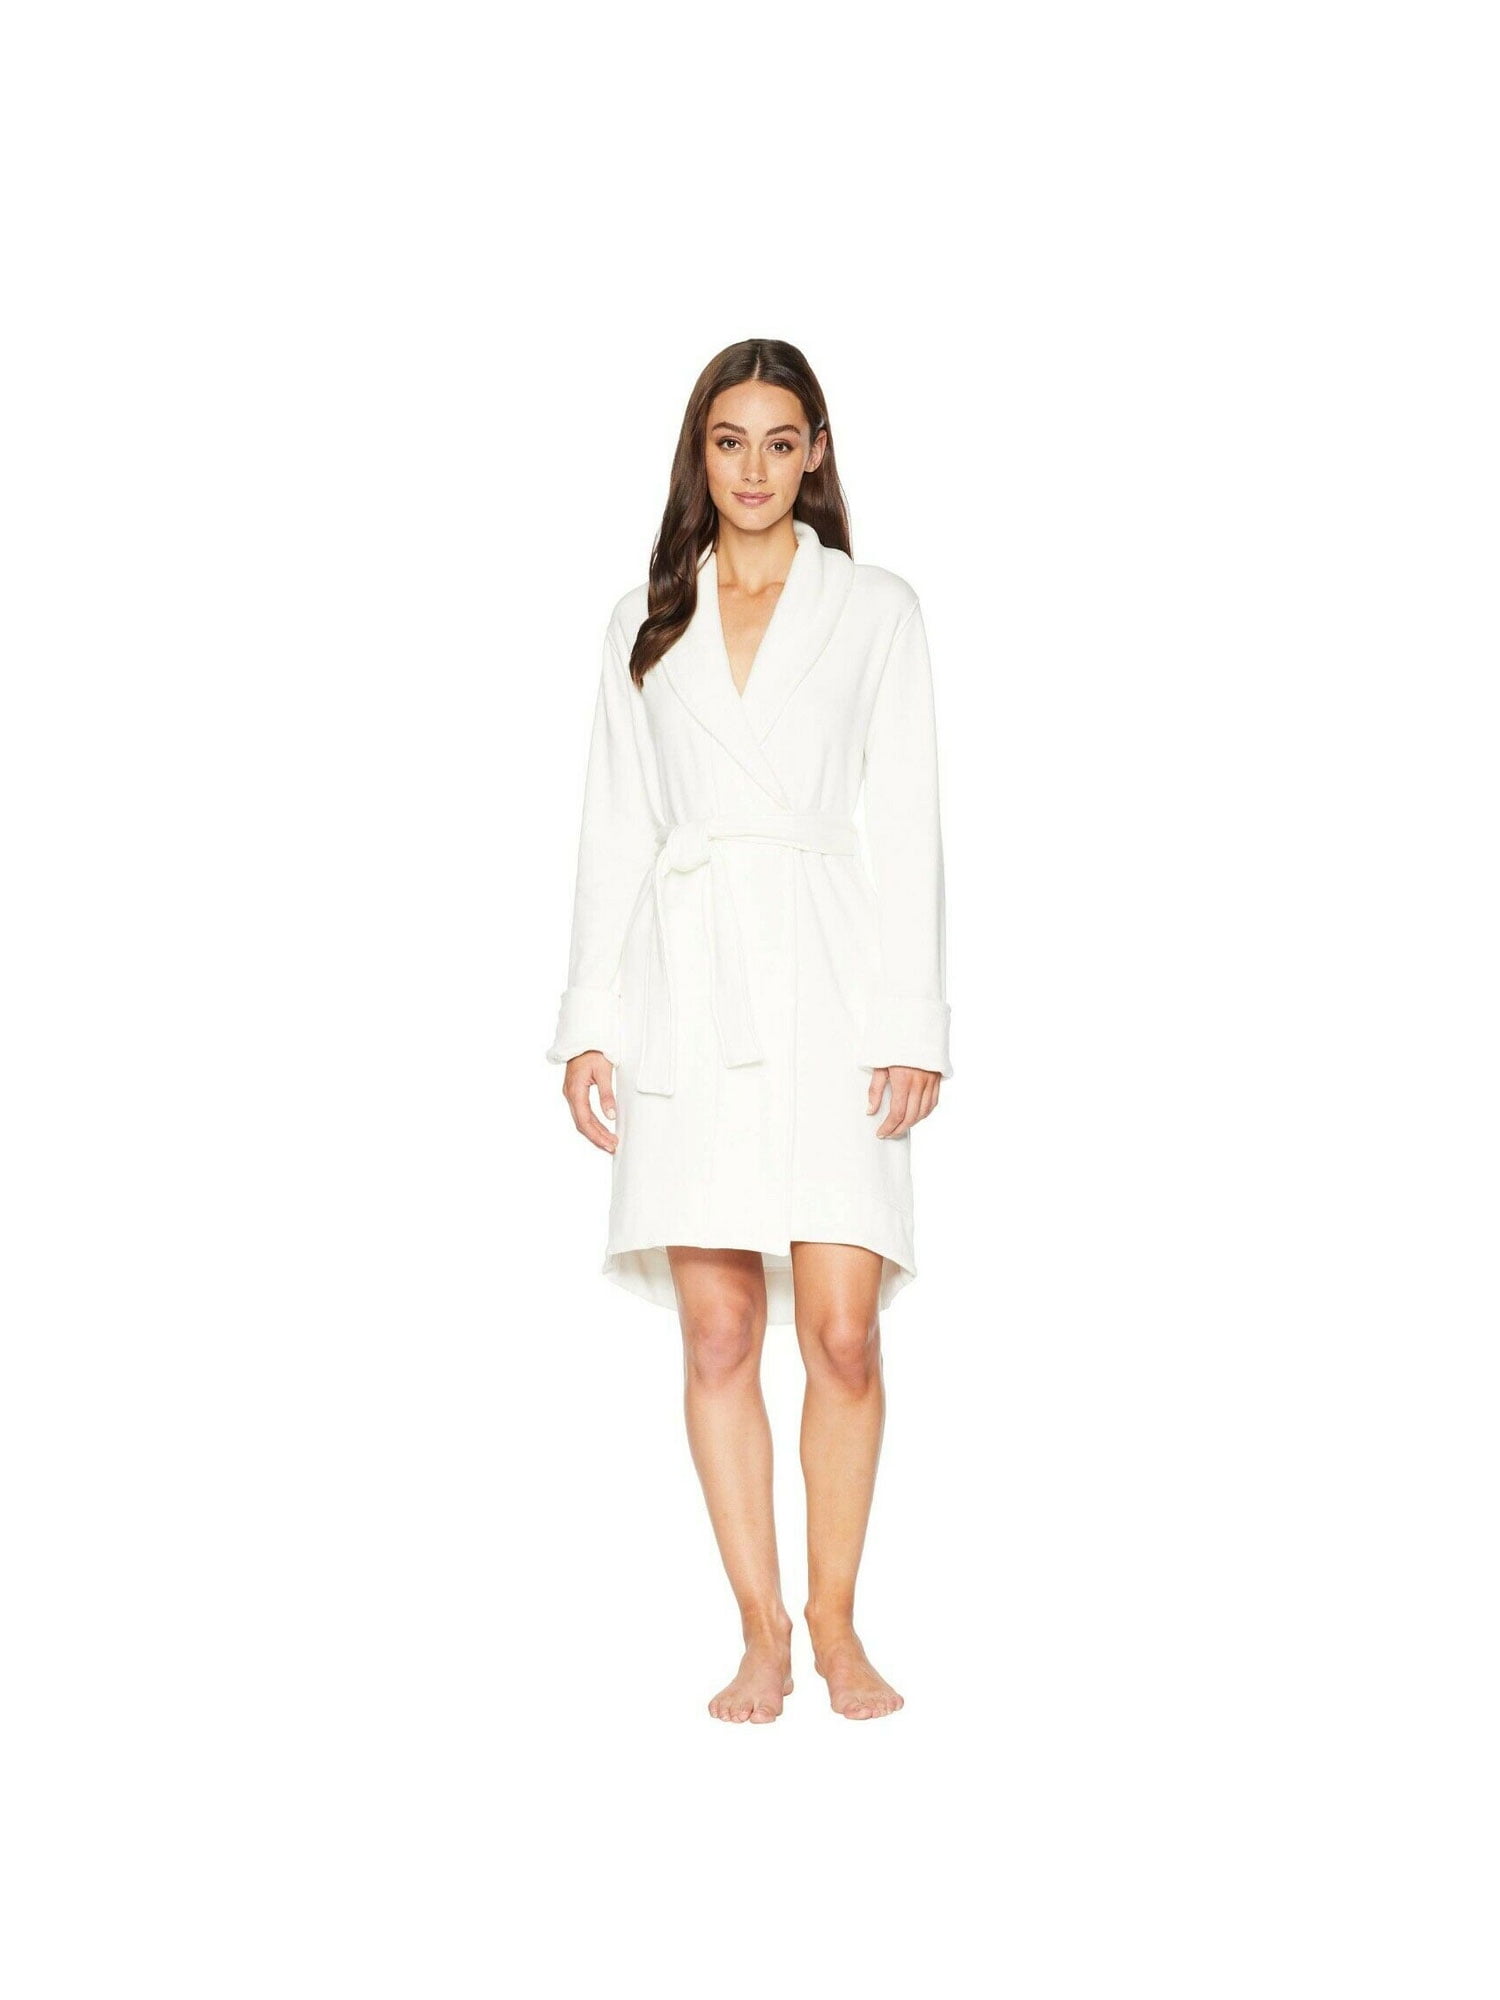 ugg blanche robe small